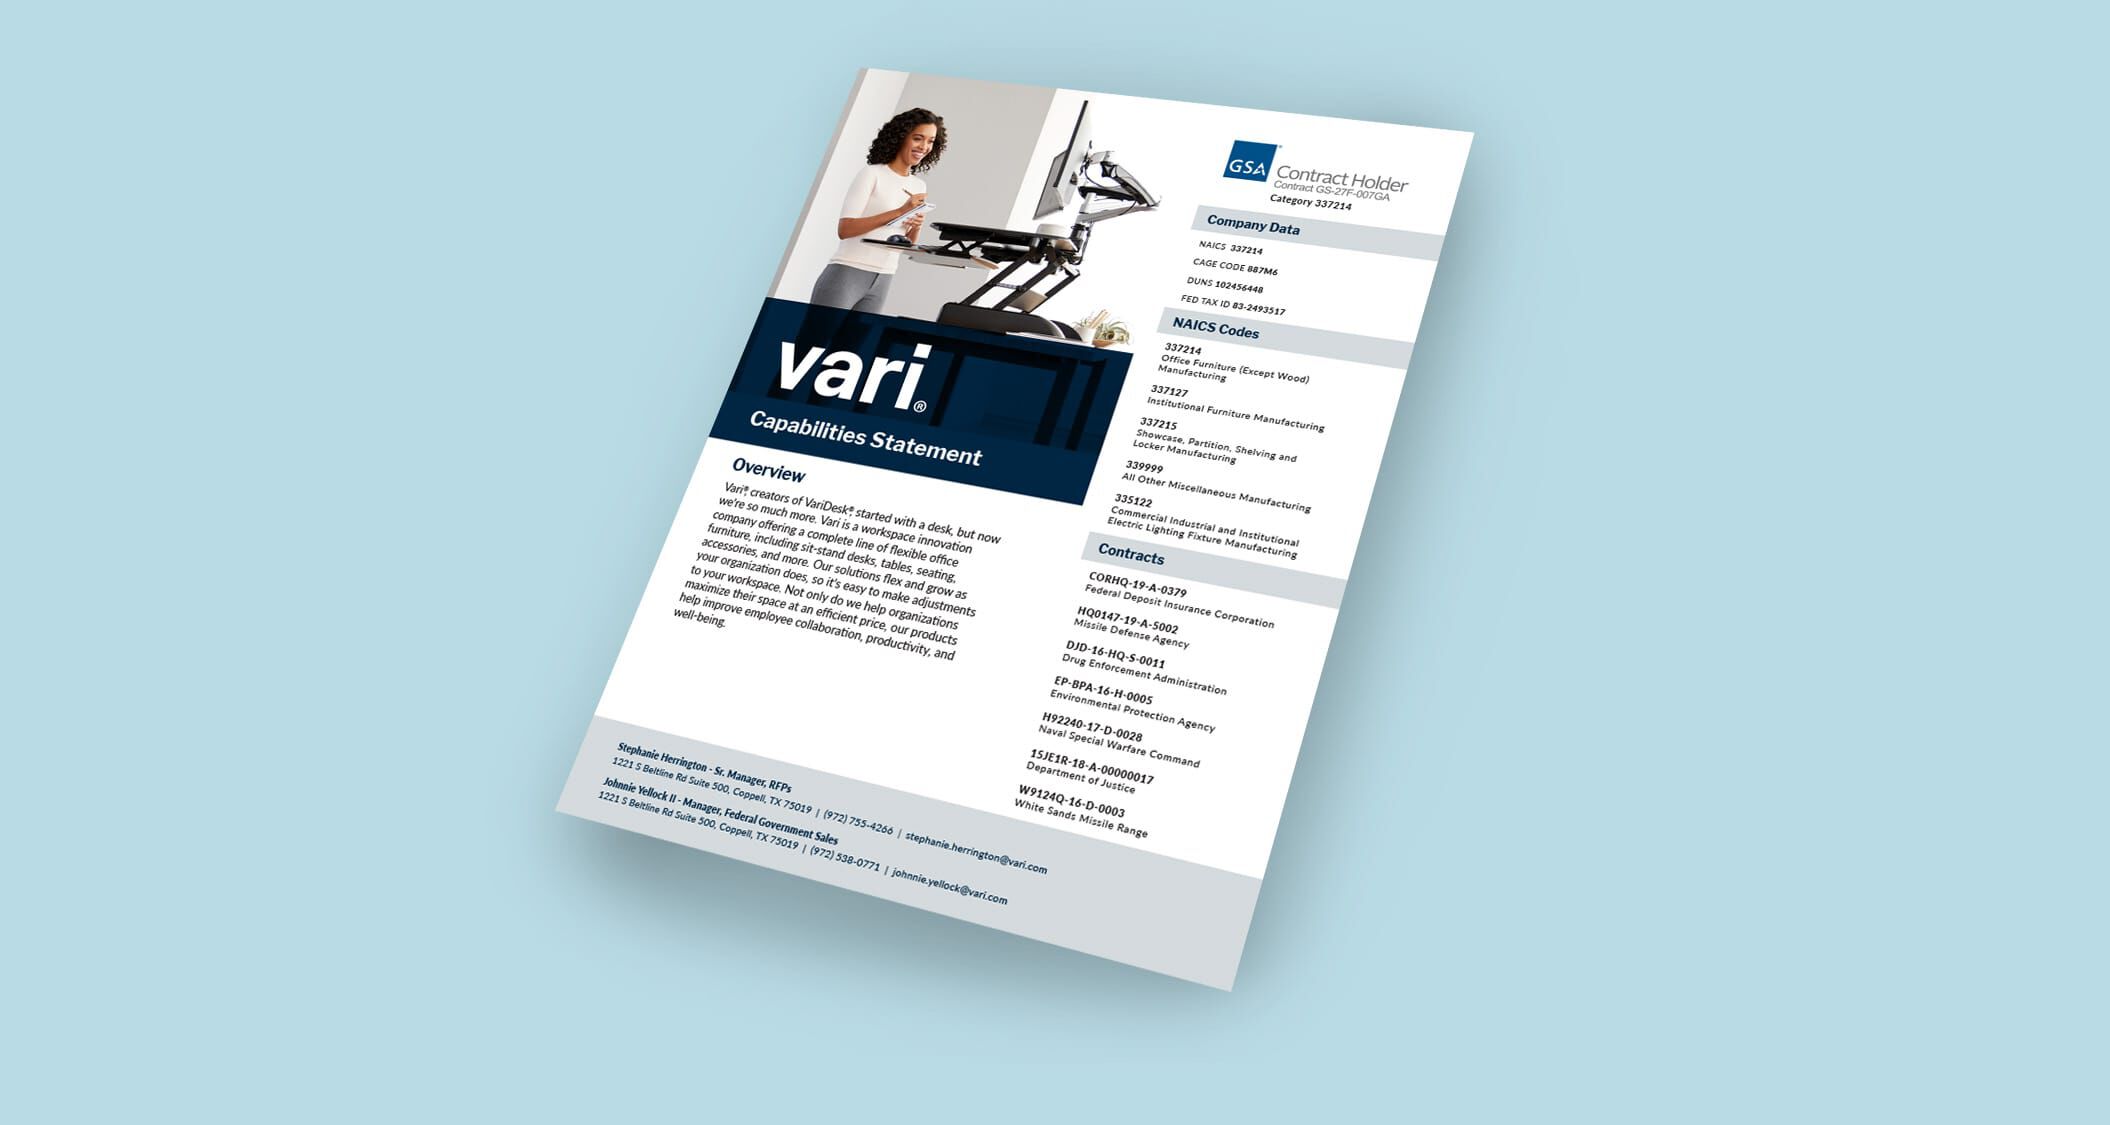 Vari capabilities statement on blue background